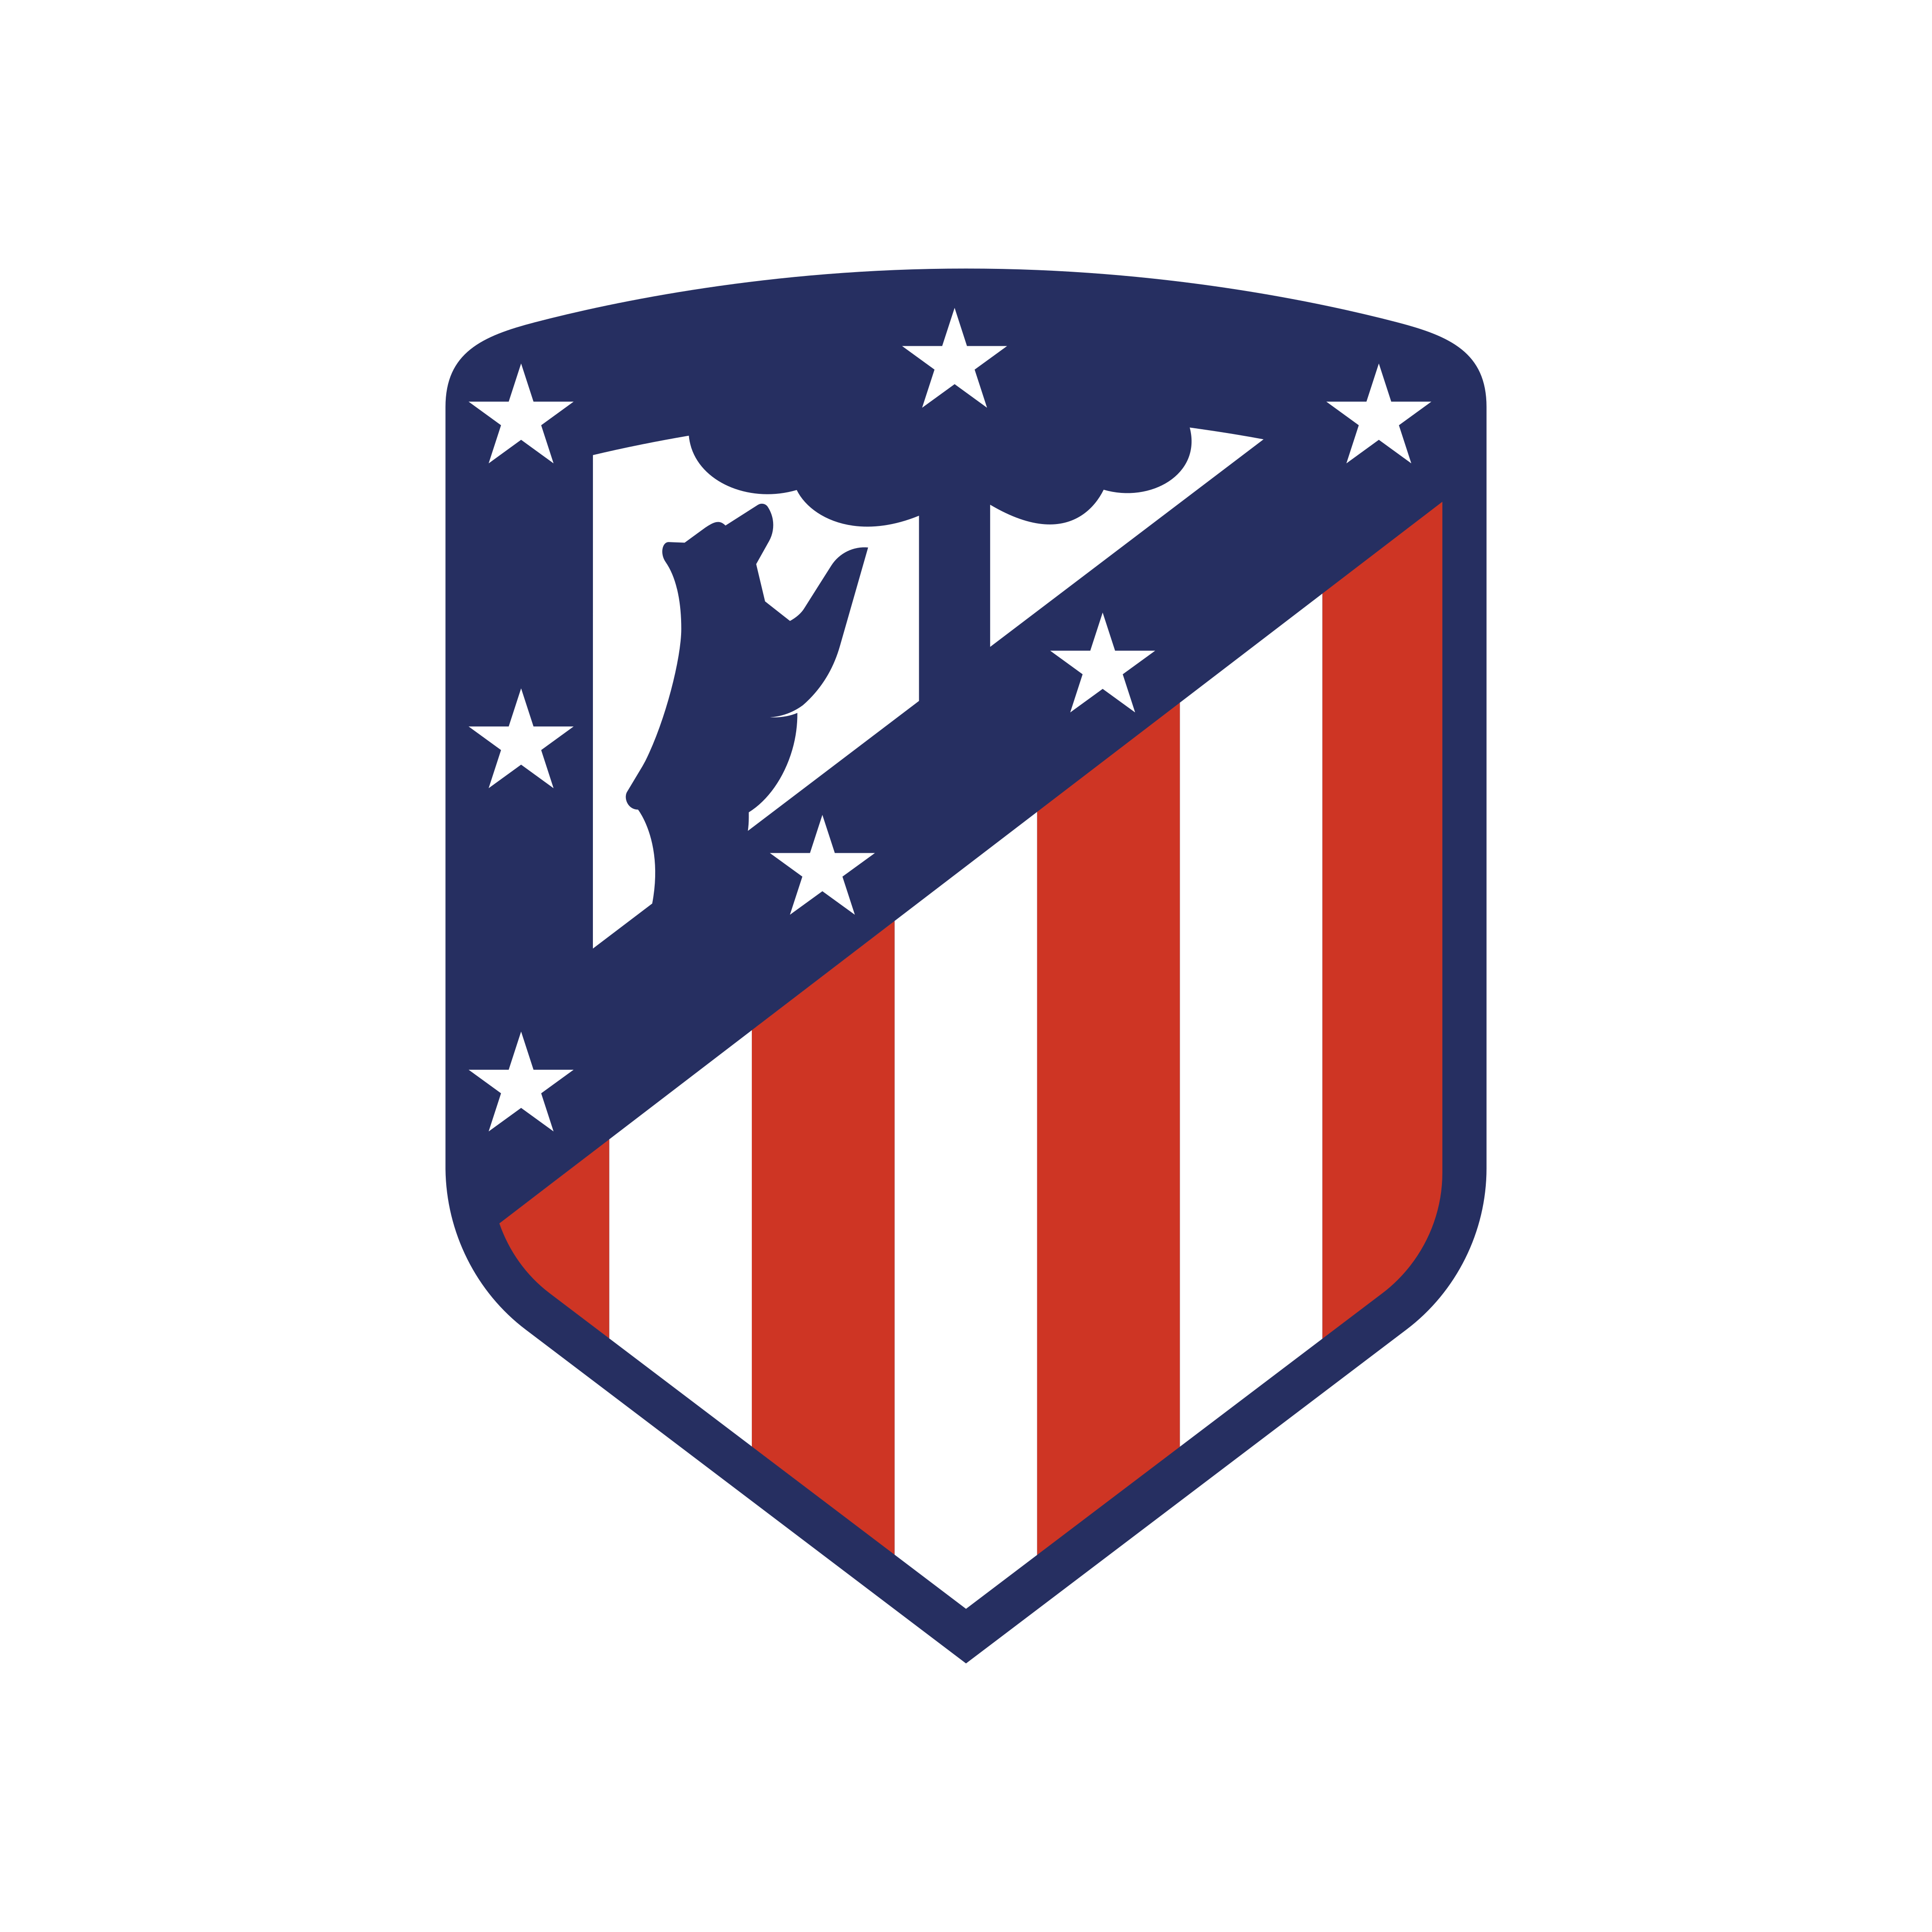 atletico madrid logo 0 - Atlético de Madrid Logo